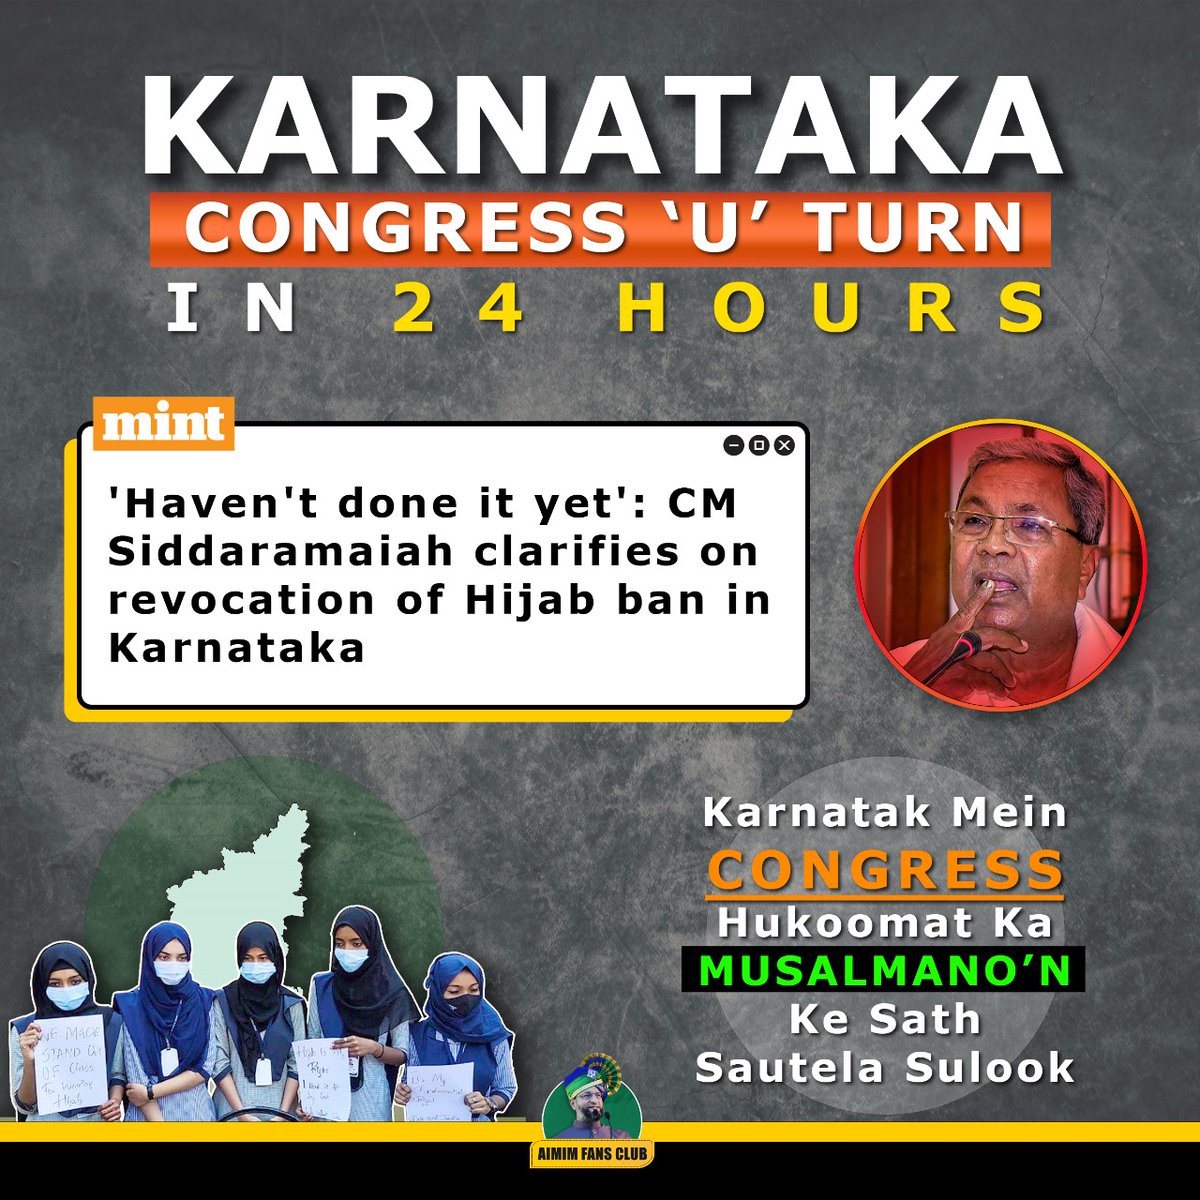 Congress and their U turns! 

#KarnatakaGovernment | #HijabBan